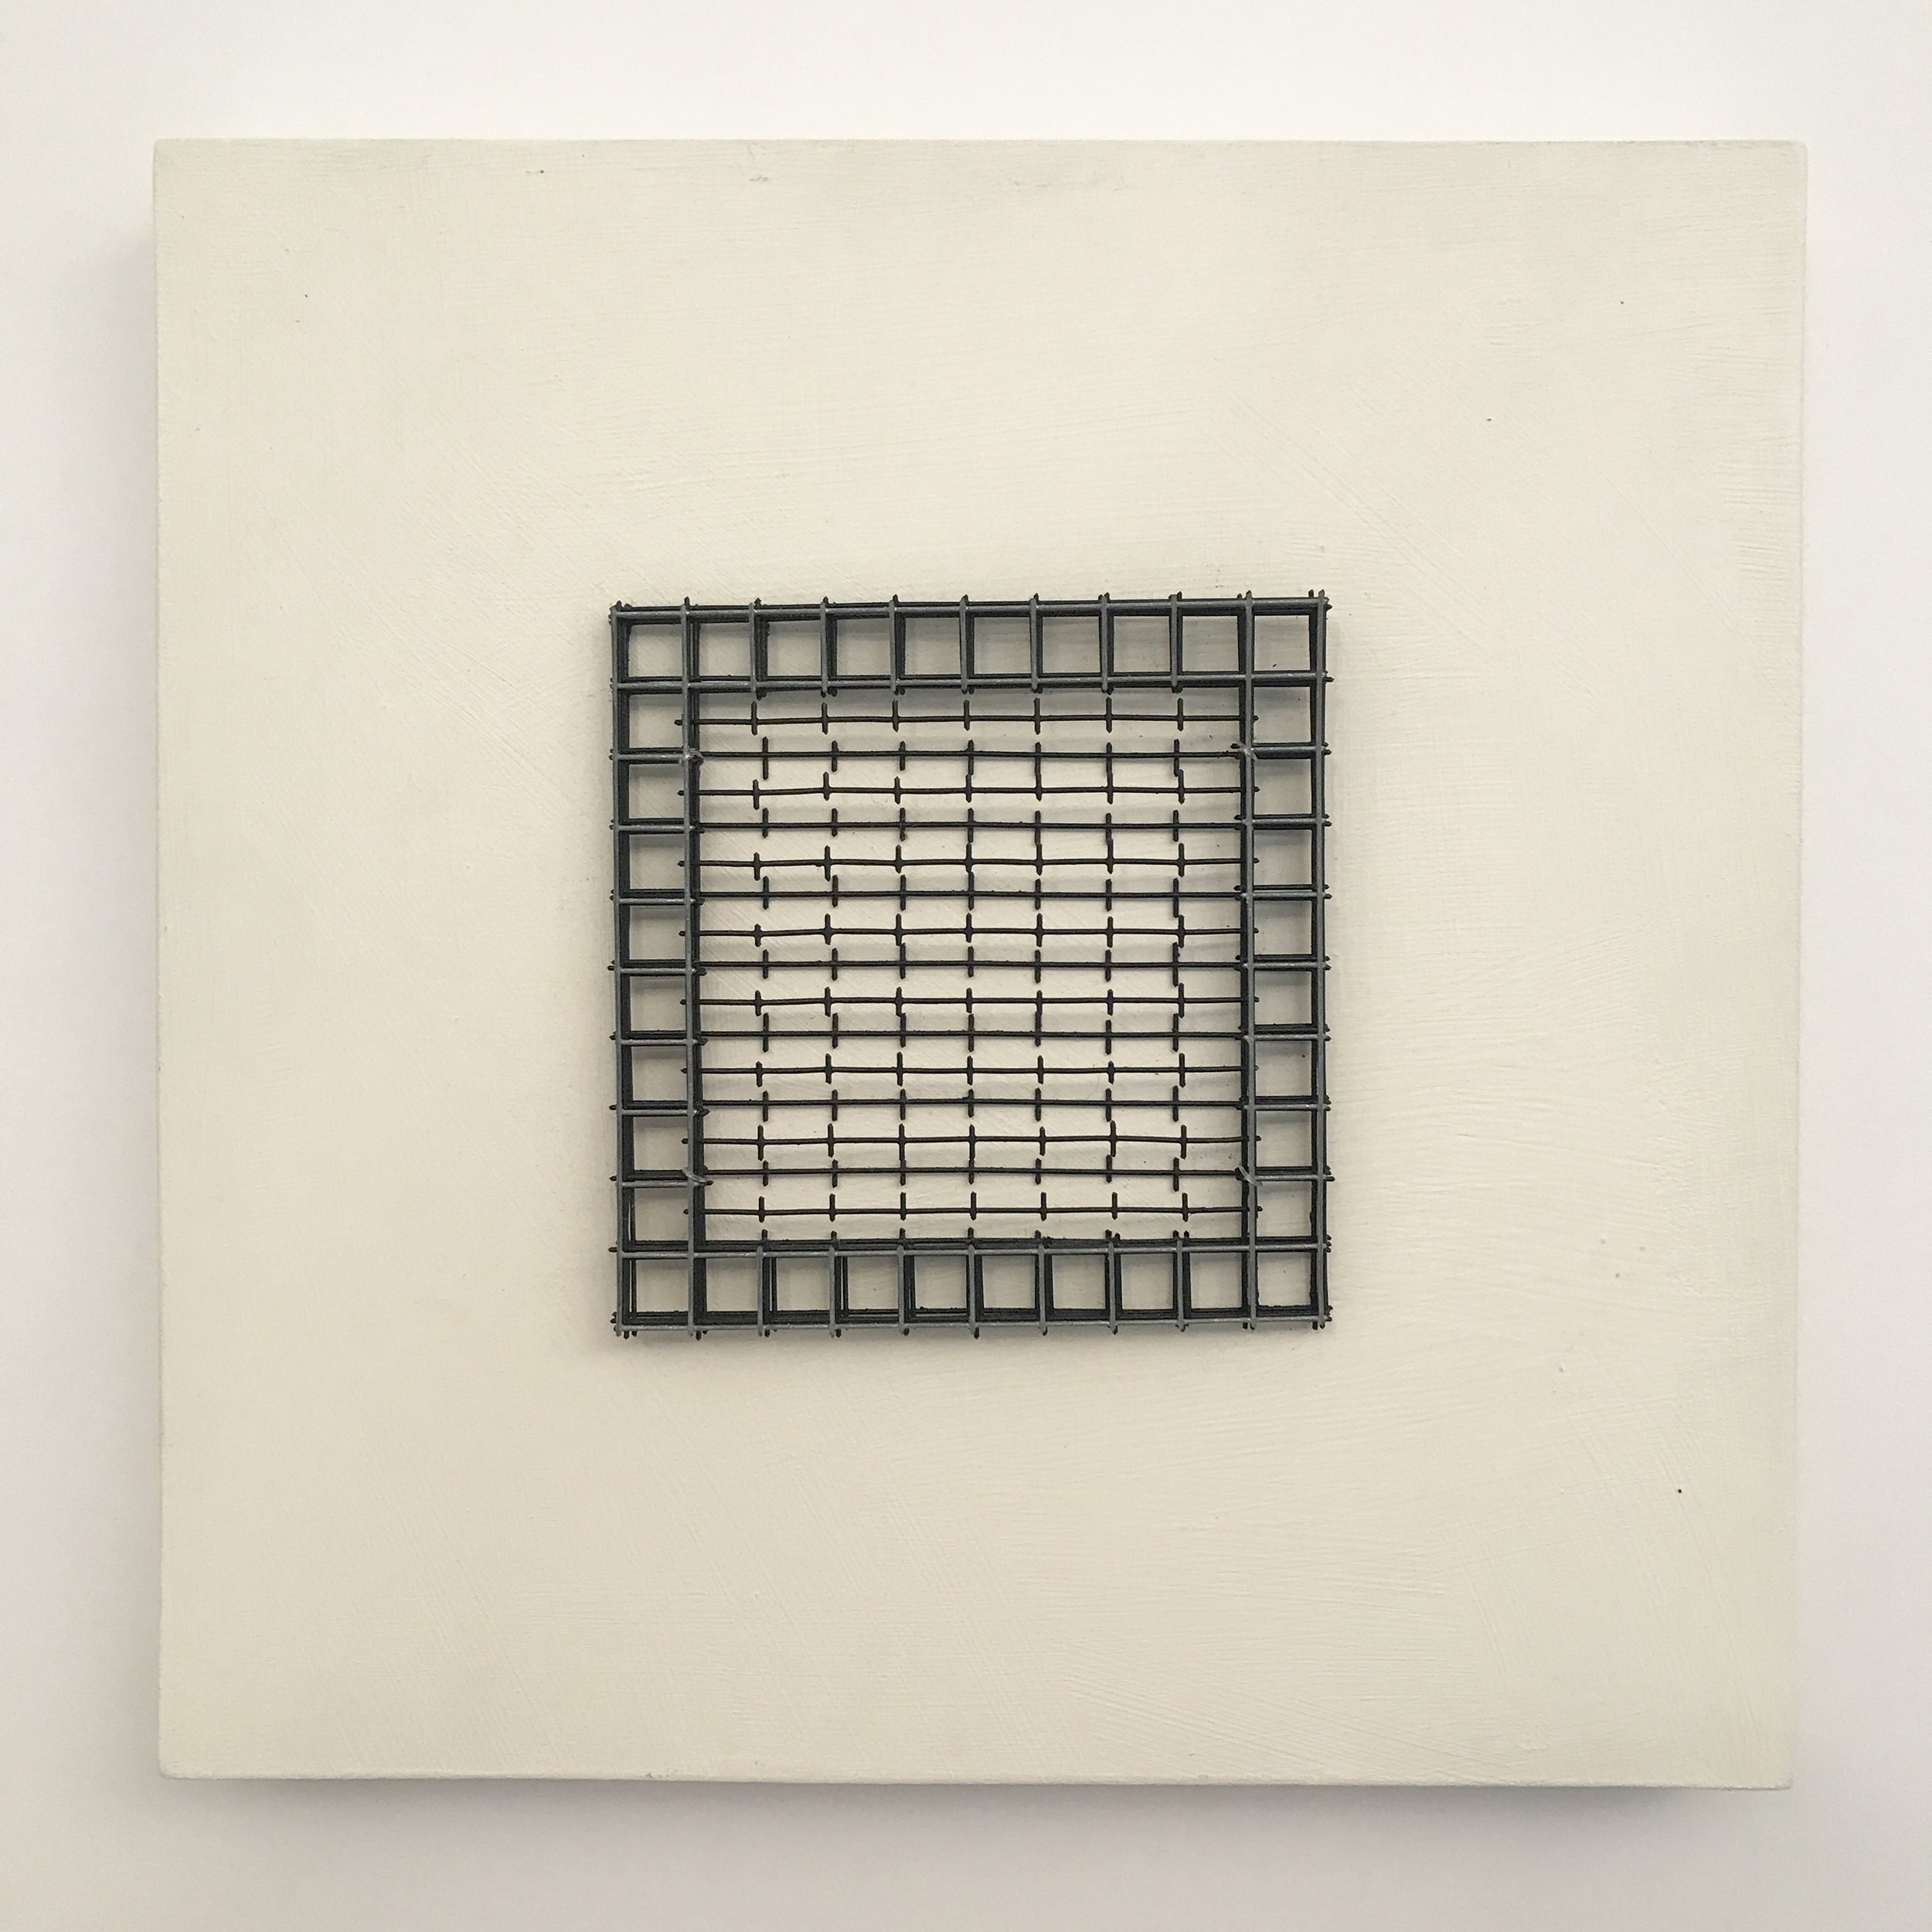  Doug Cross,  Meditation Square #4,  Wire mesh and wood, 12”x12”x3” 